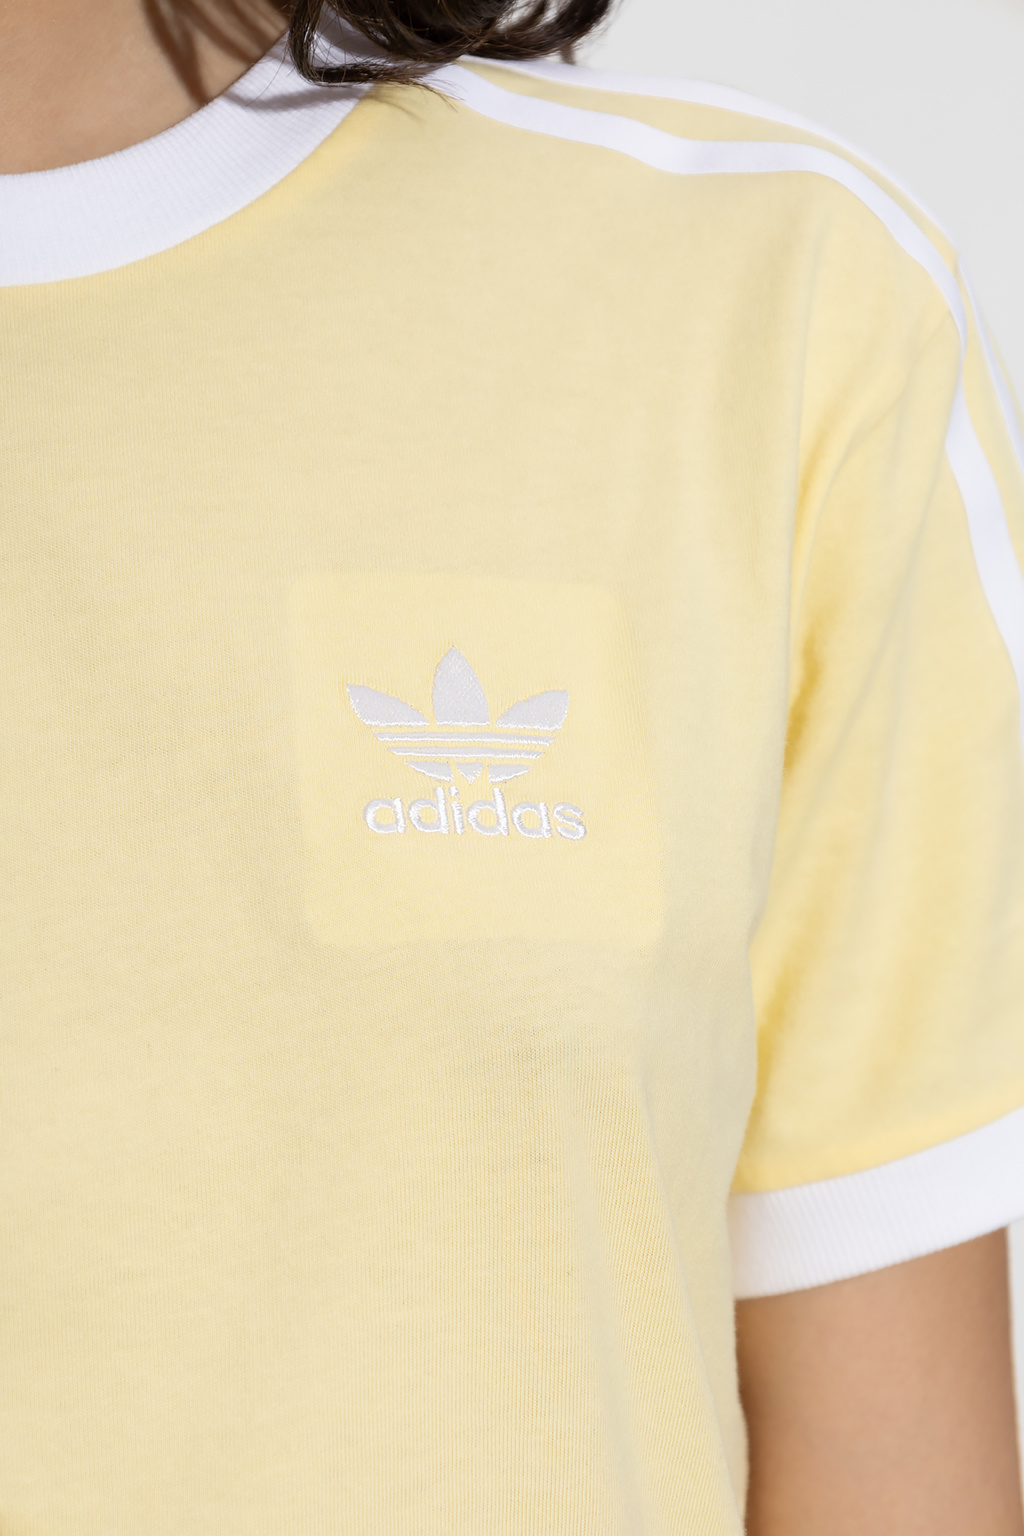 ADIDAS Originals T-shirt with logo | Women's Clothing | Vitkac